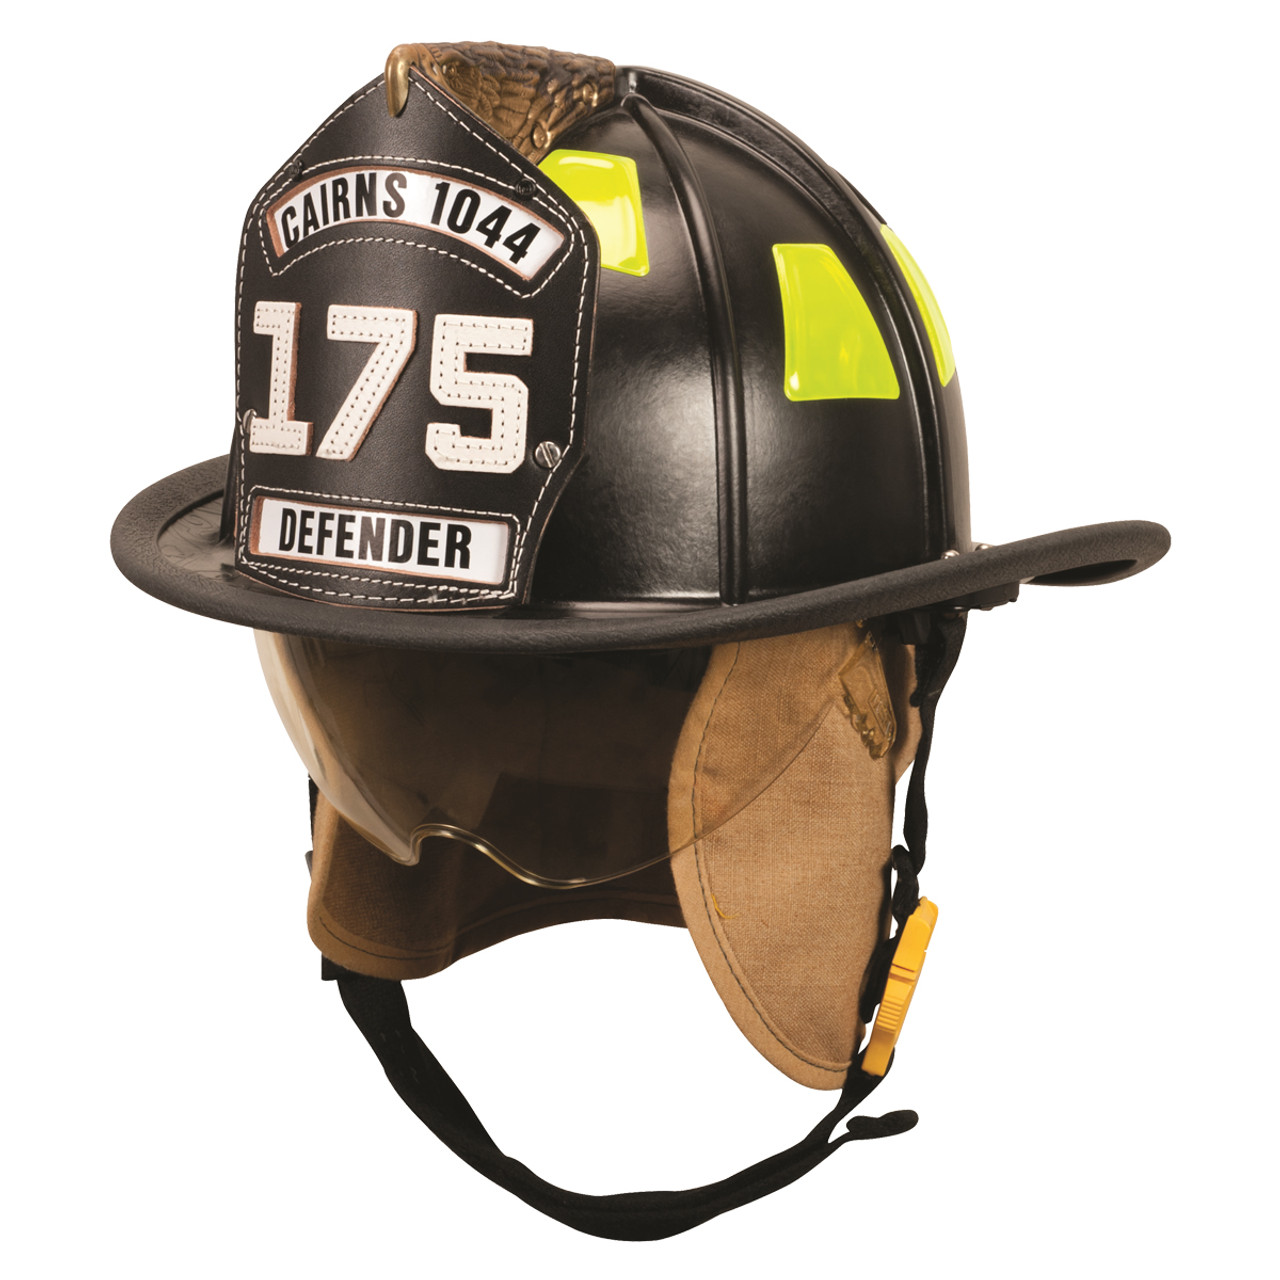 MSA Cairns 1044 Traditional Composite Fire Helmet